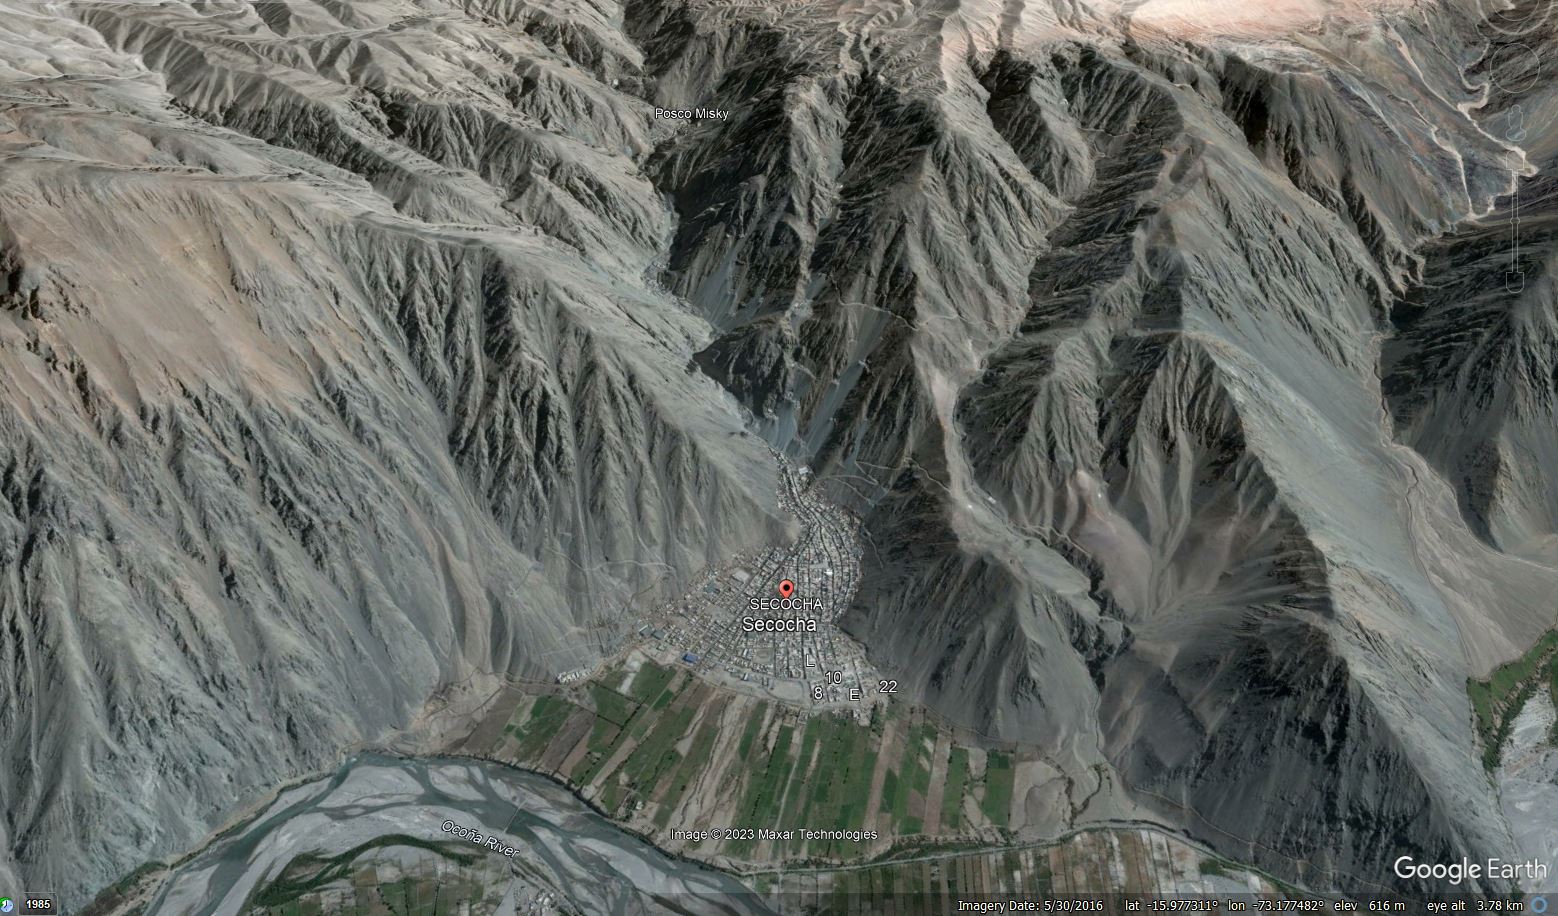 Google Earth image of Secocha in Peru.